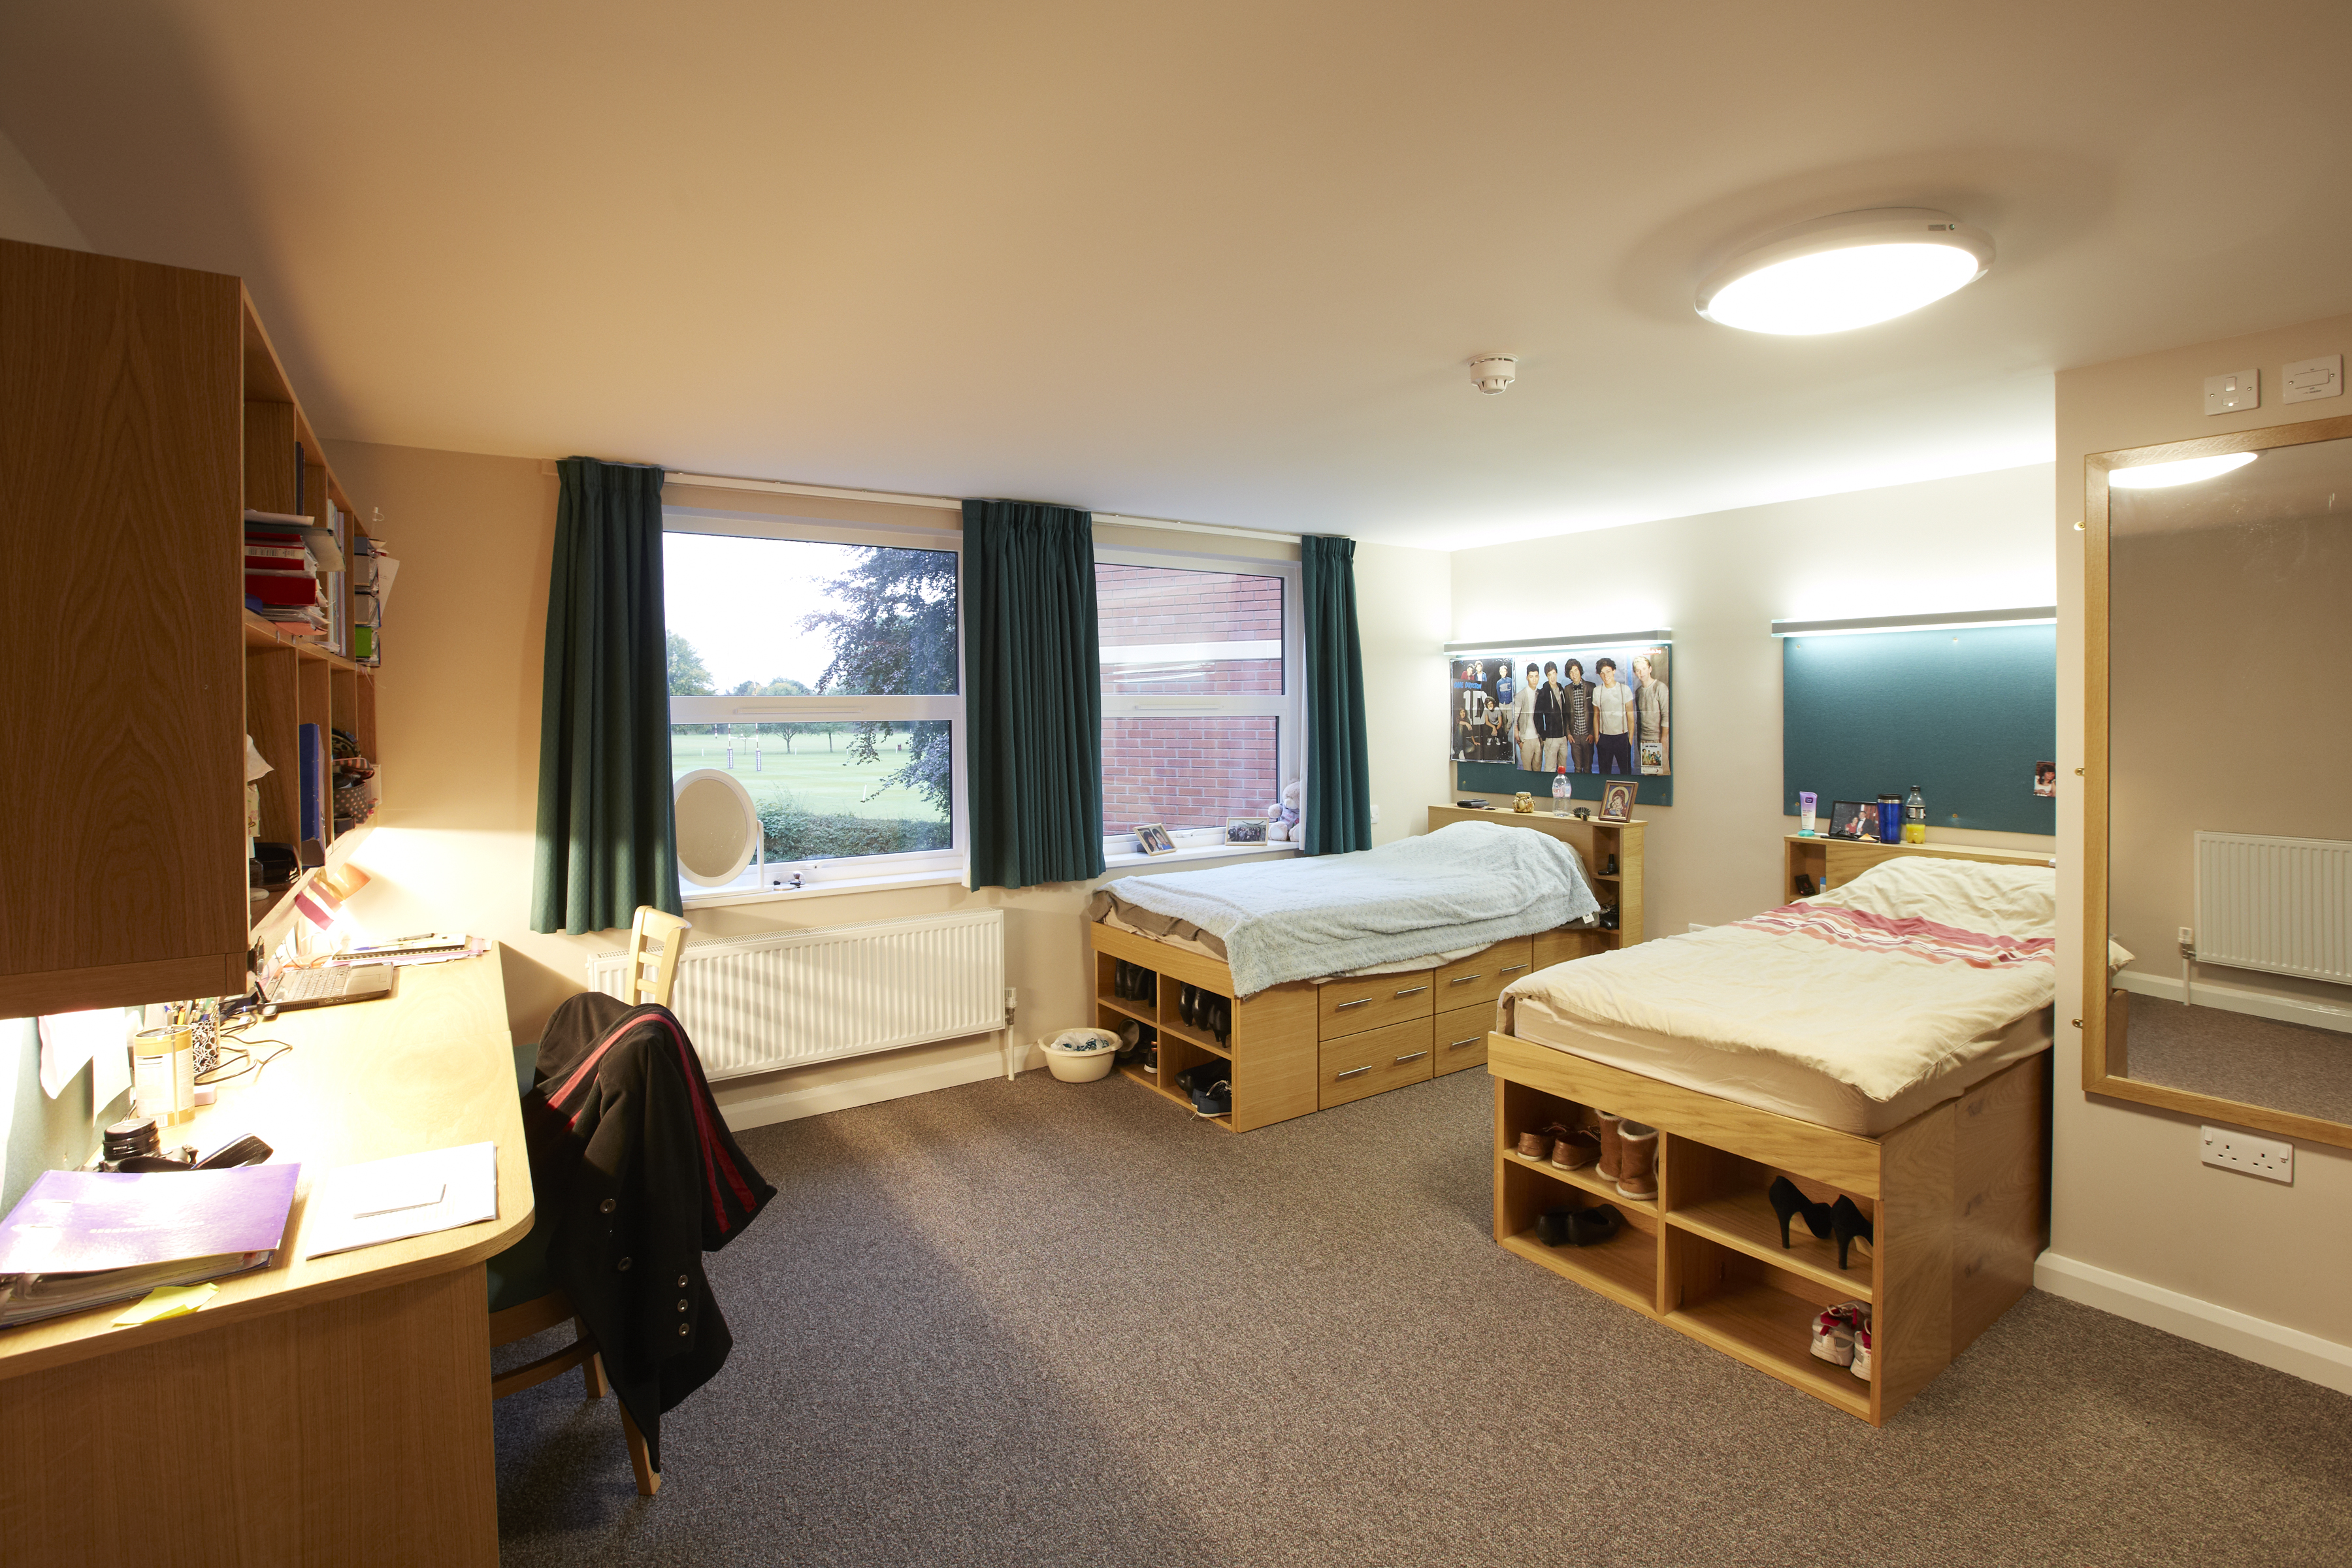 Example of a bedroom at Bromsgrove International Summer School